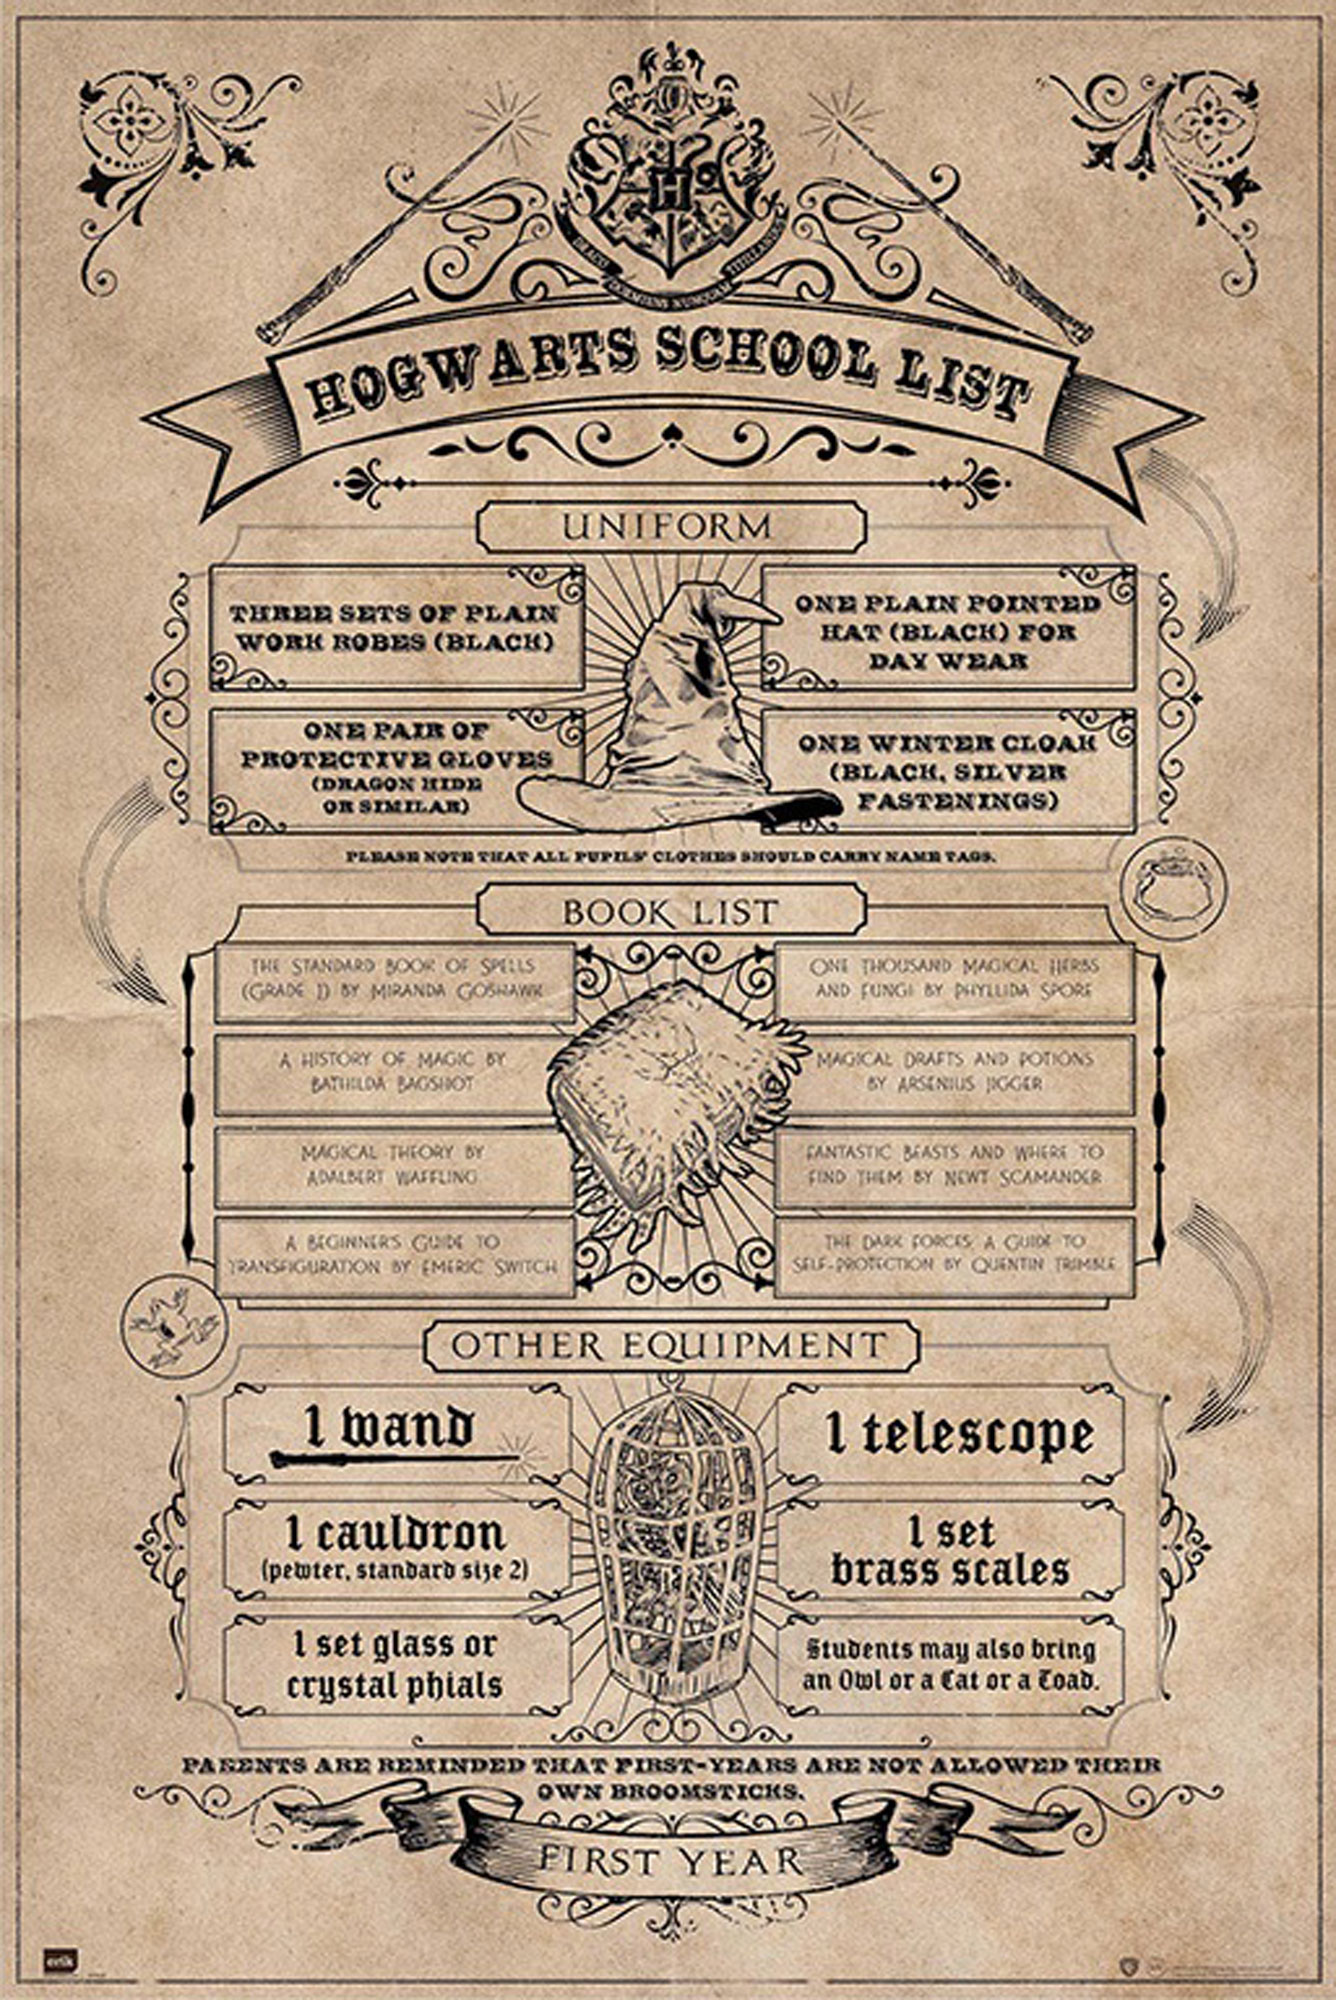 Harry School - Potter List